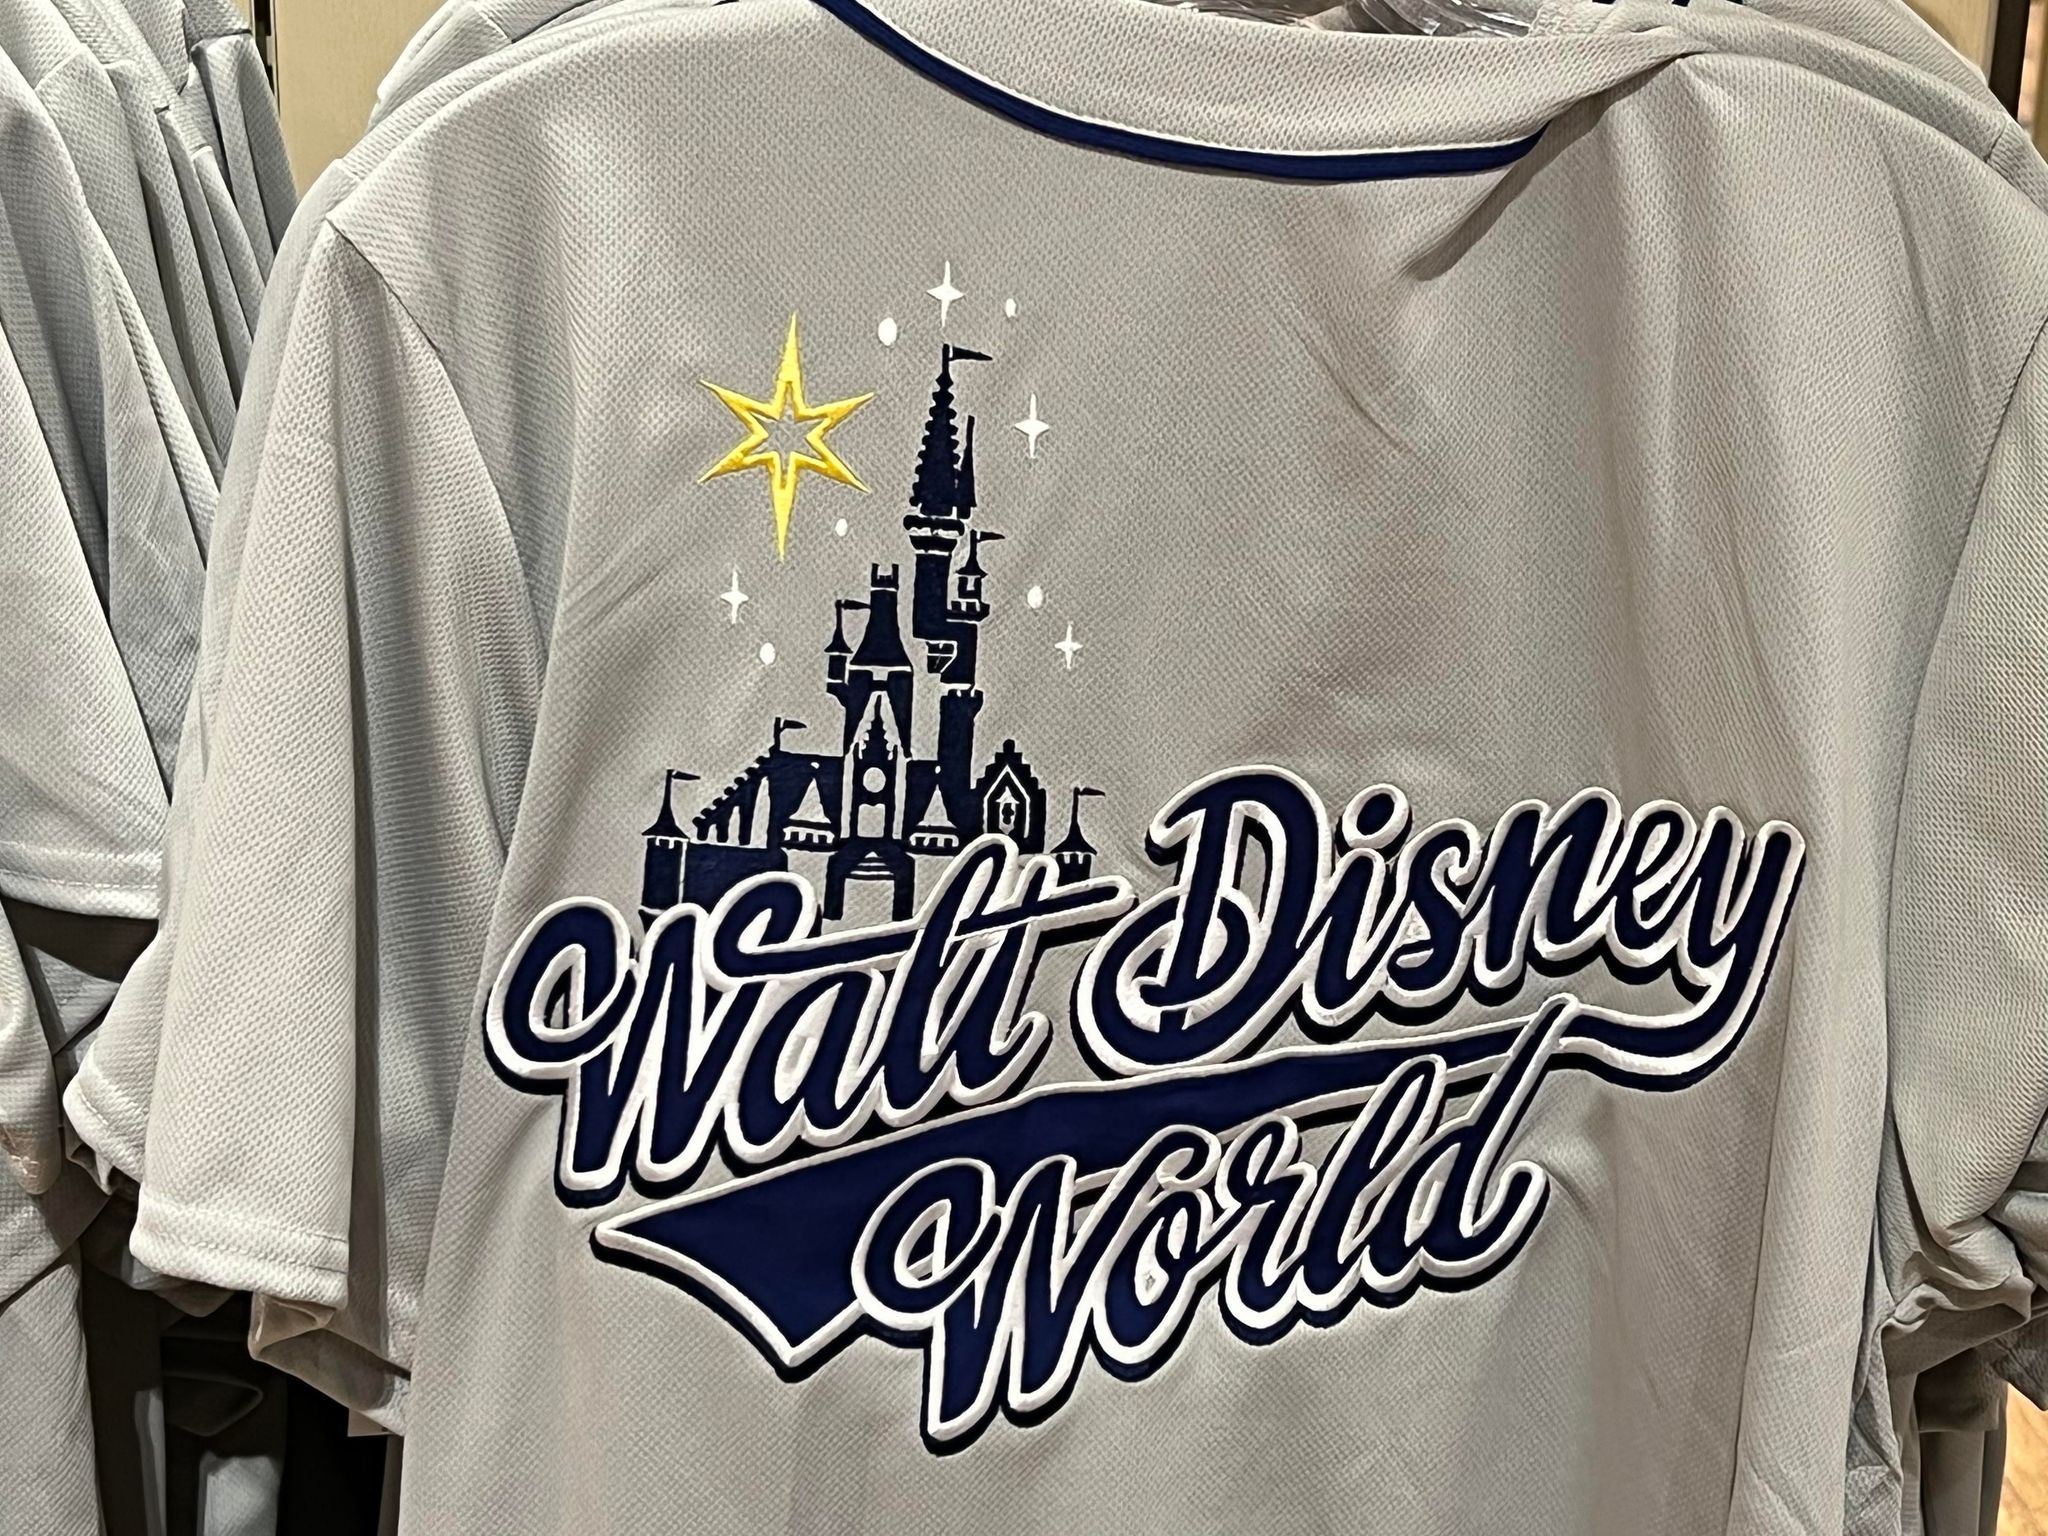 Batter Up! New Disney World Baseball Jersey NOW at World of Disney